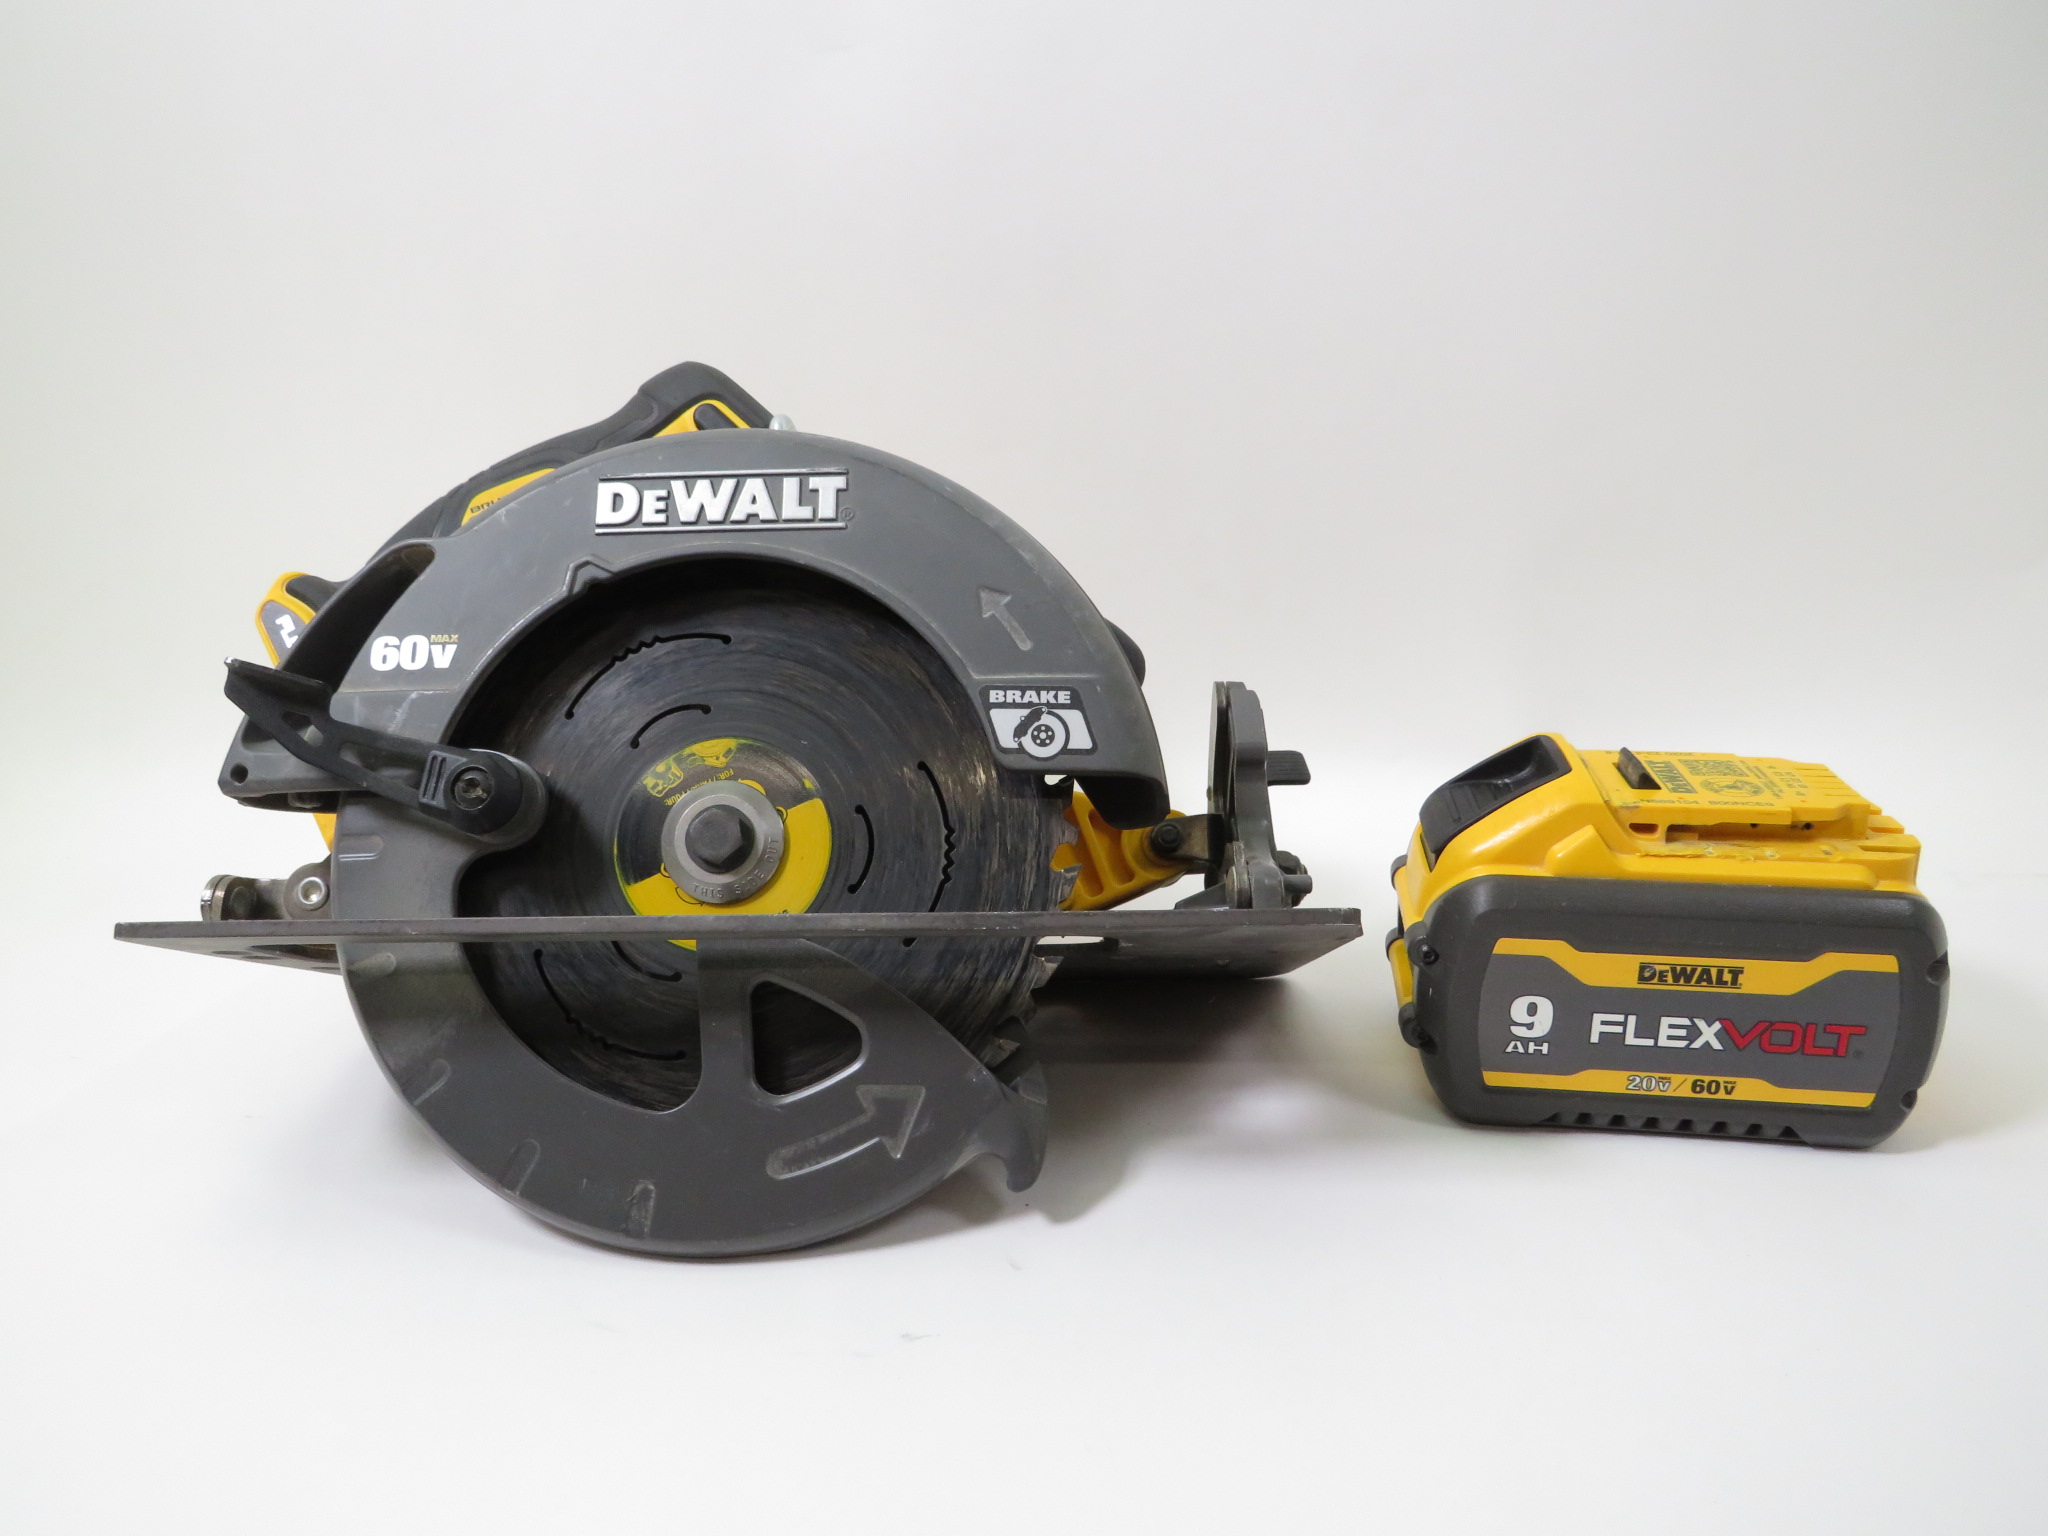 DeWalt DCS578 MAX 7 1/4" Brushless Cordless Saw